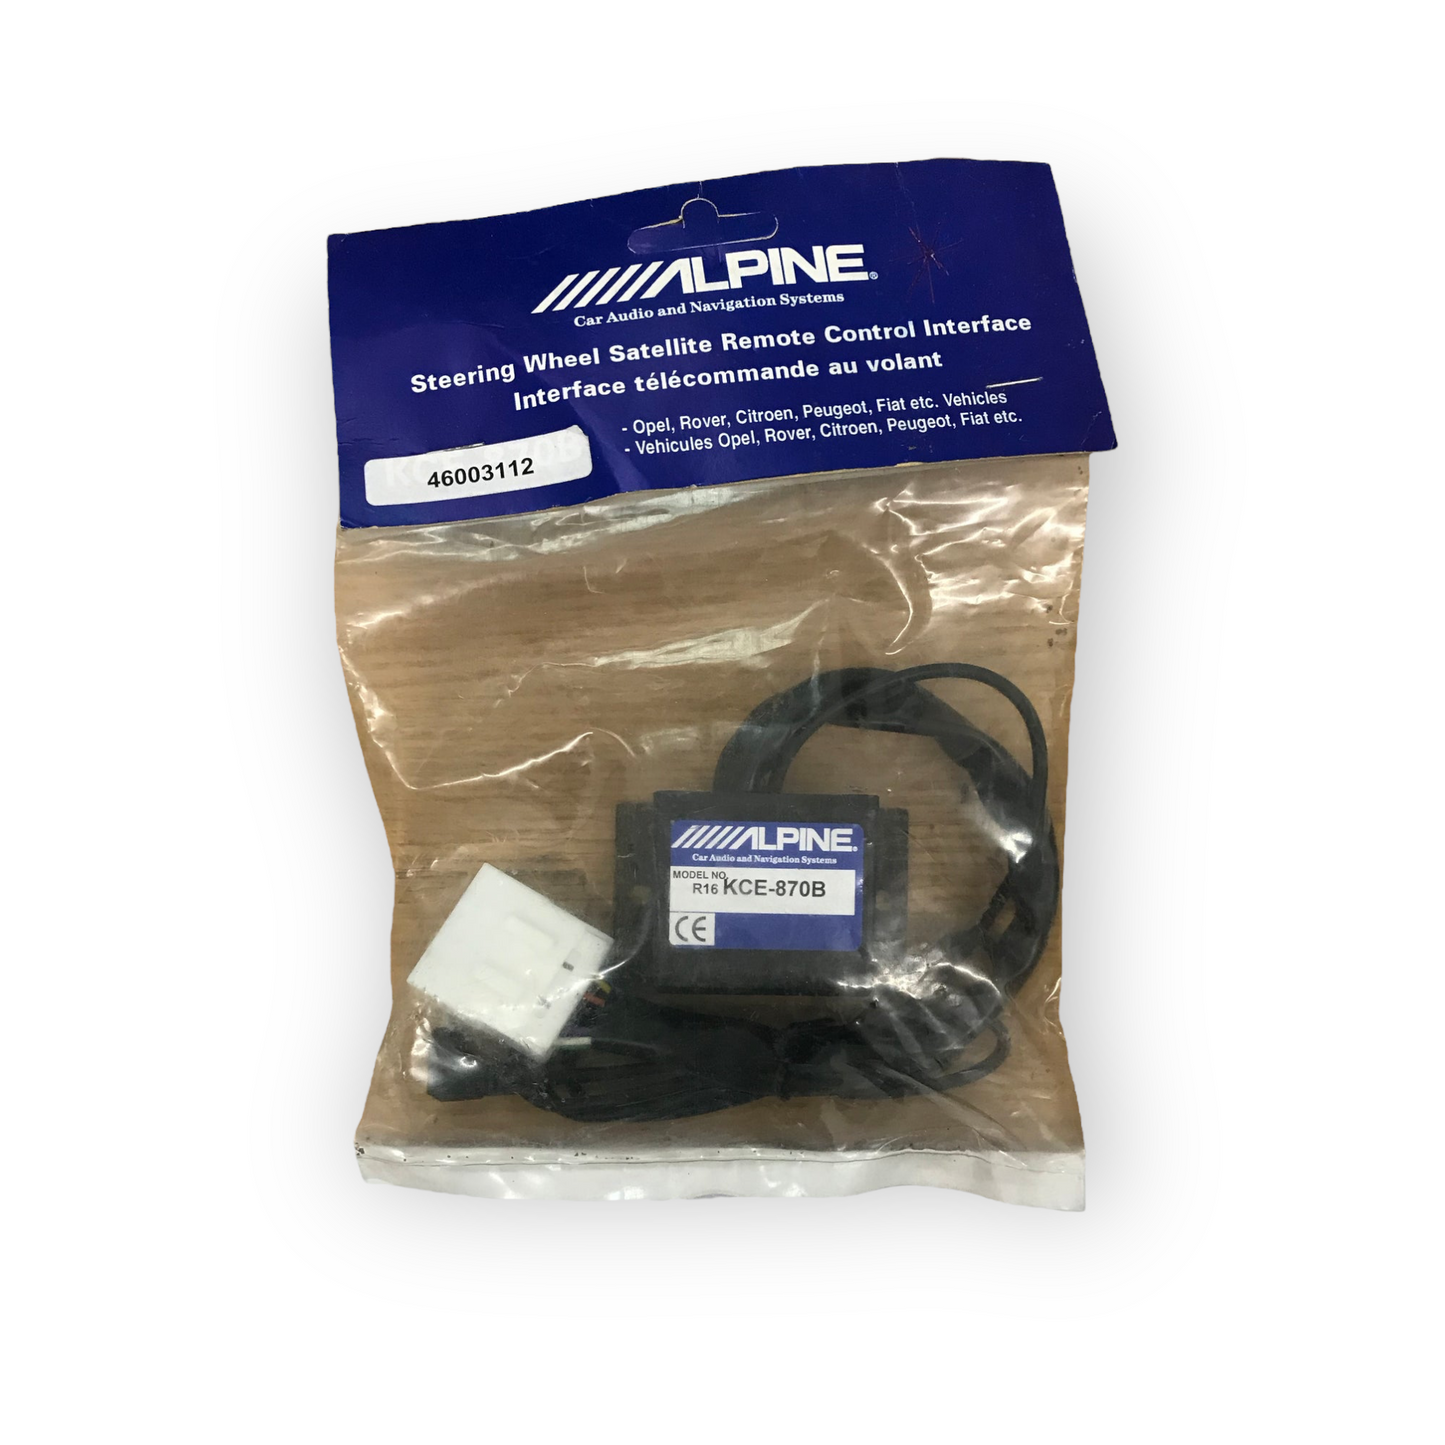 Alpine R16 KCE-870B steering wheel satellite remote control interface - 46003112